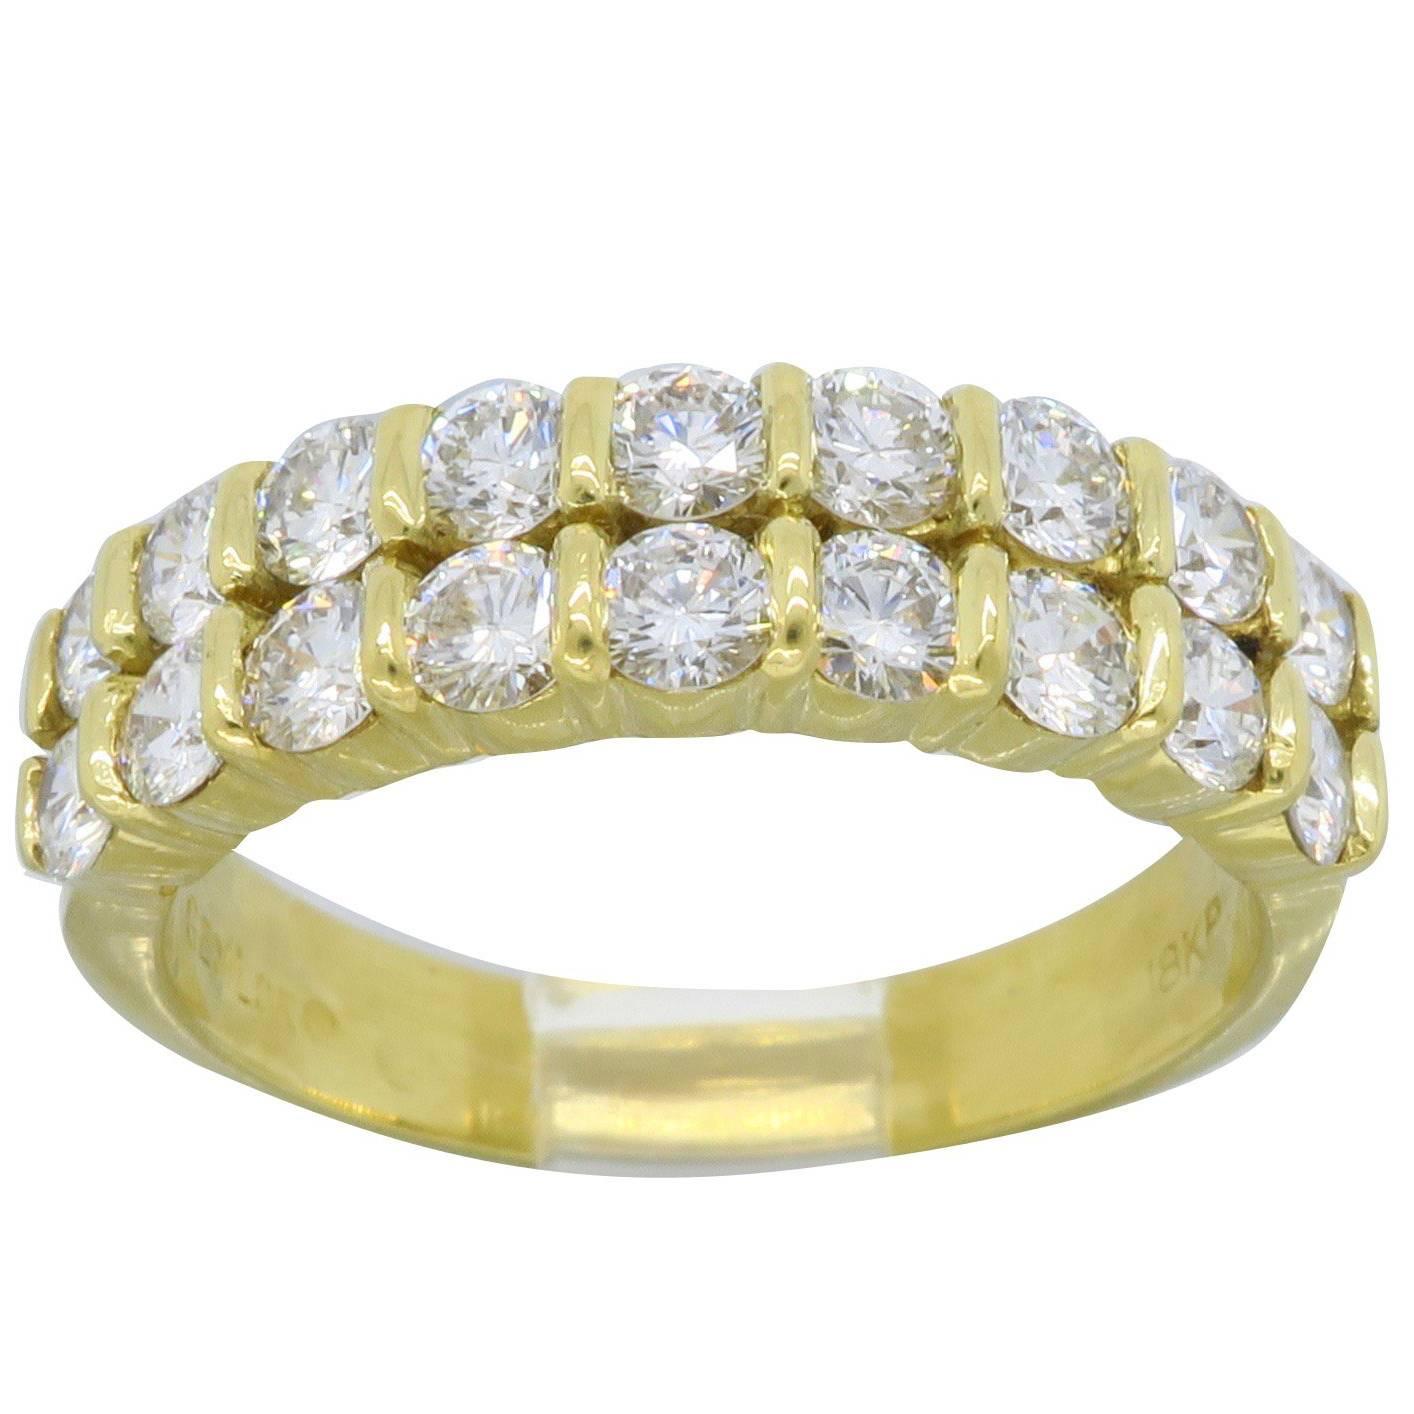  18k Yellow Gold Diamond Double Band Anniversary Ring 